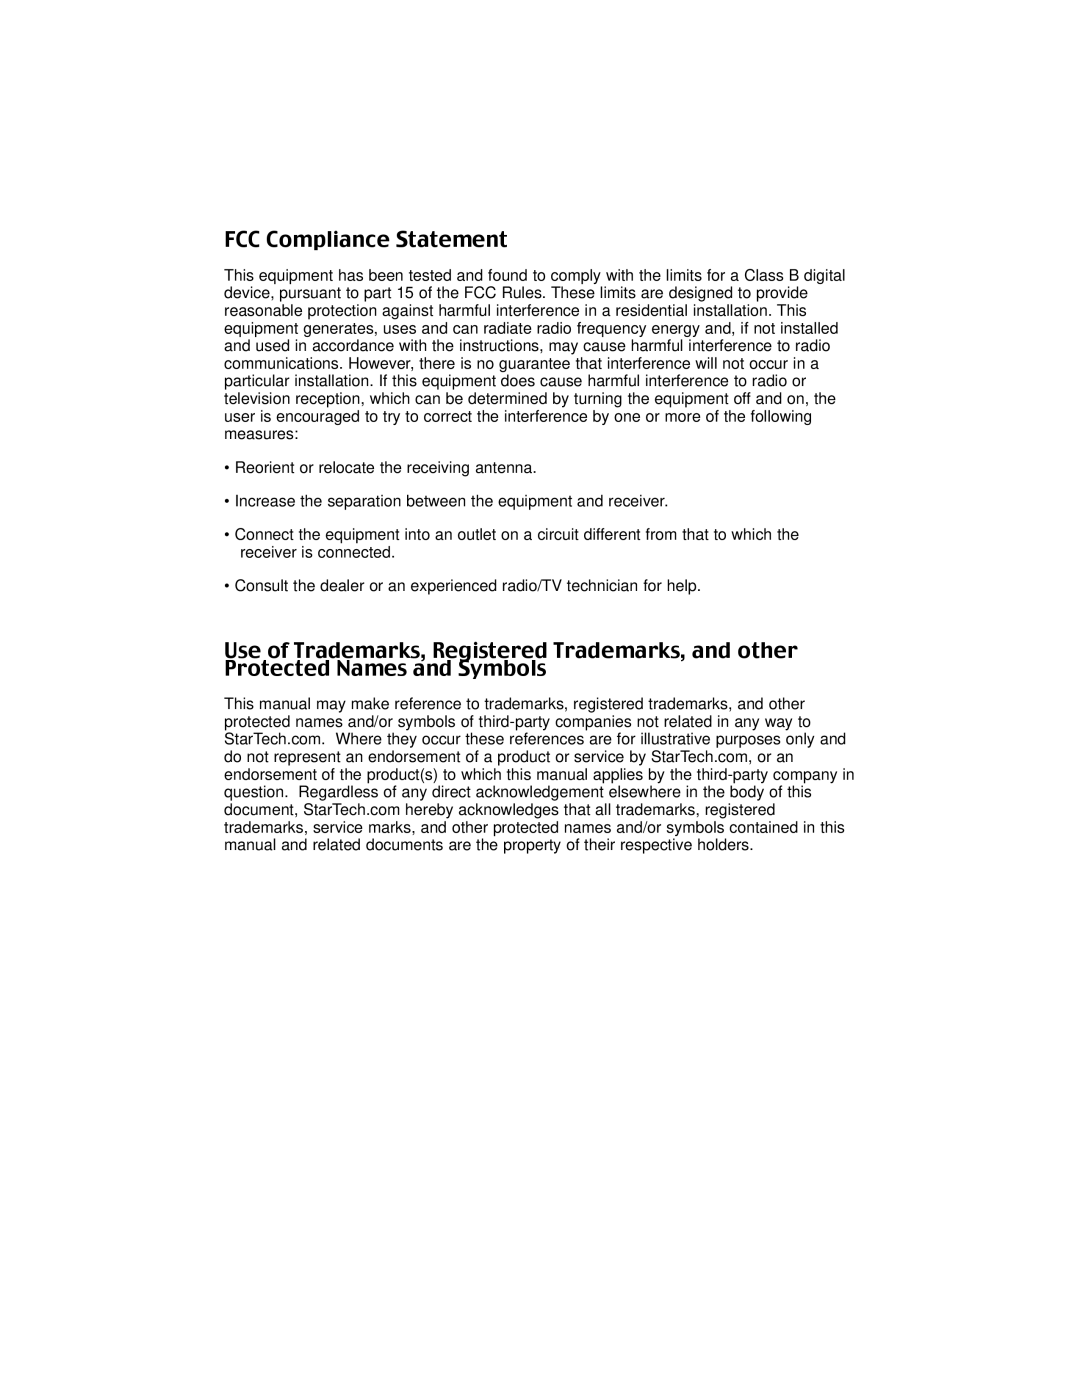 StarTech.com ATX2POWER400 instruction manual FCC Compliance Statement 